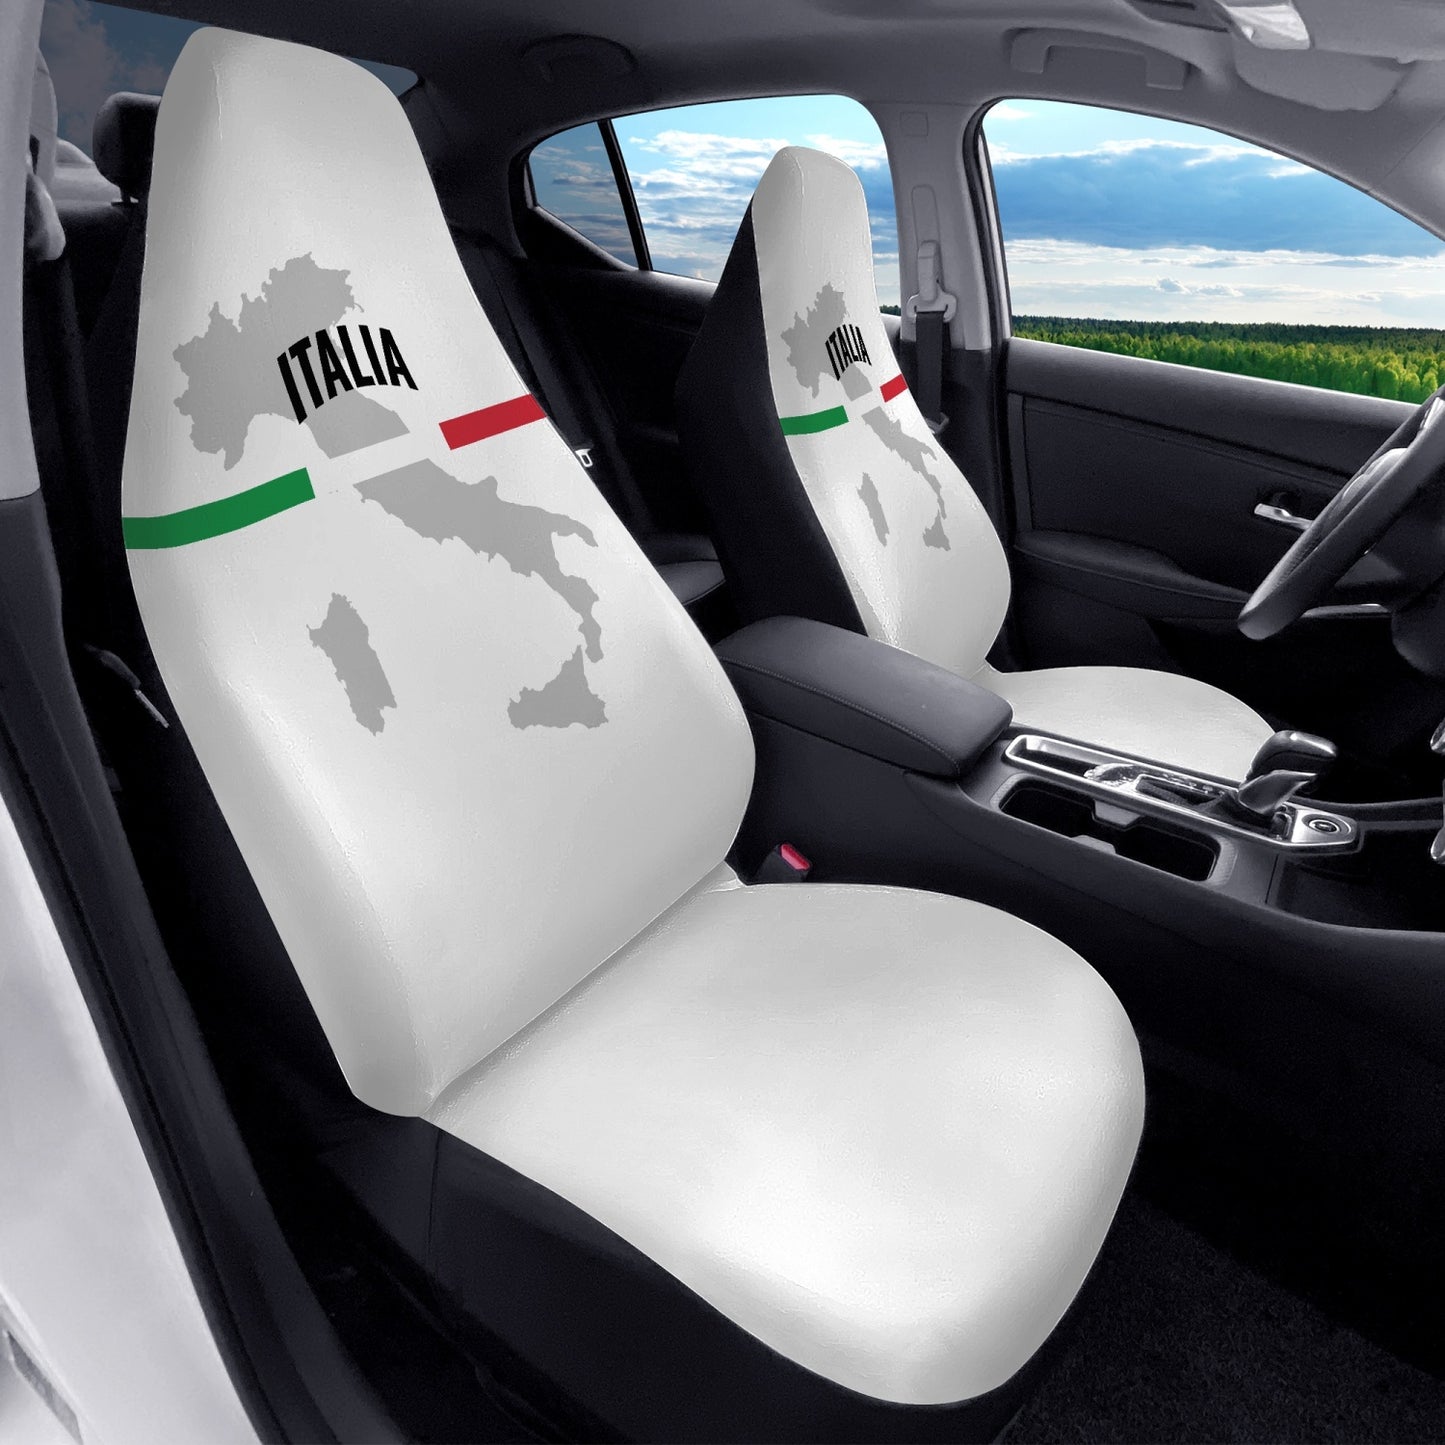 Italia white Car Seats Cover 2Pcs